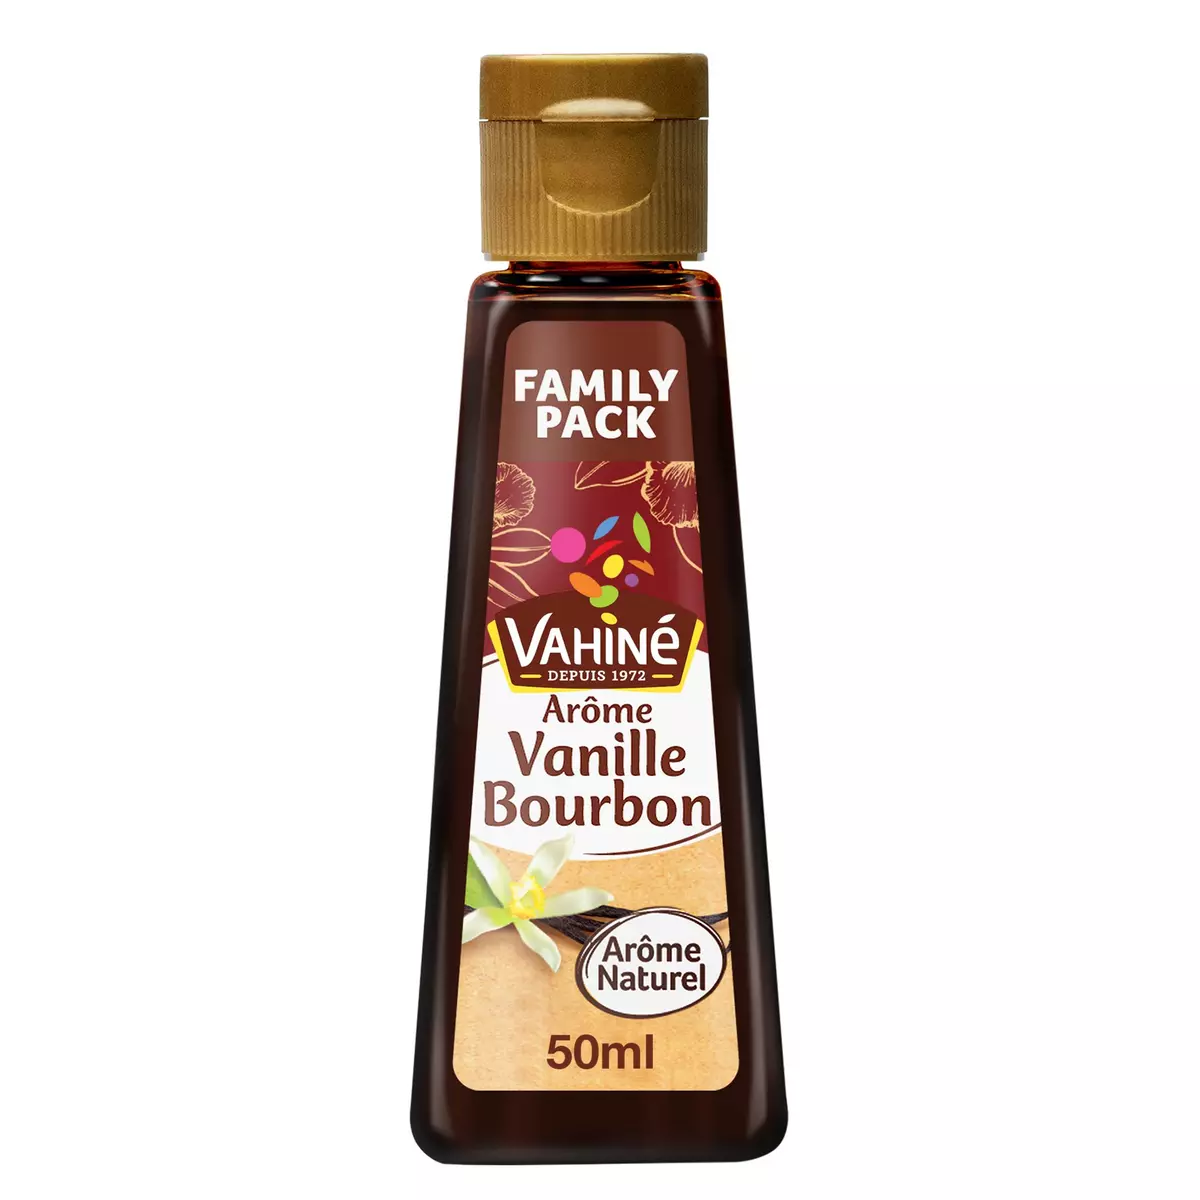 VAHINE Arôme naturel liquide de vanille bourbon 50ml